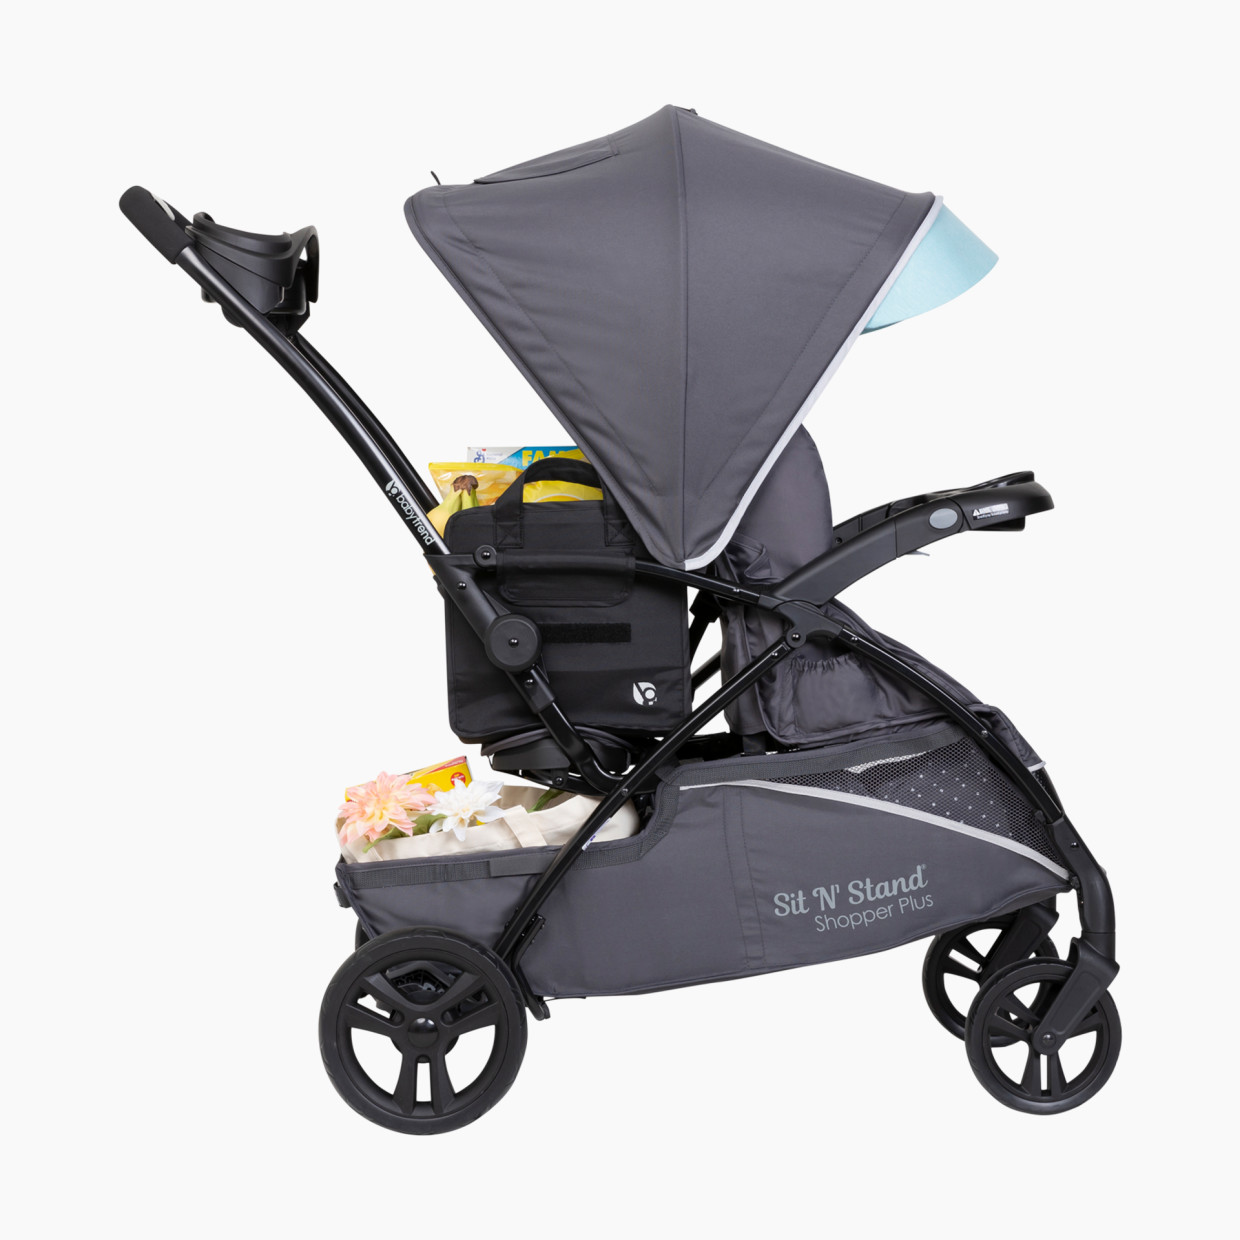 Baby Trend Sit N Stand 5-in-1 Shopper Stroller - Blue Mist.